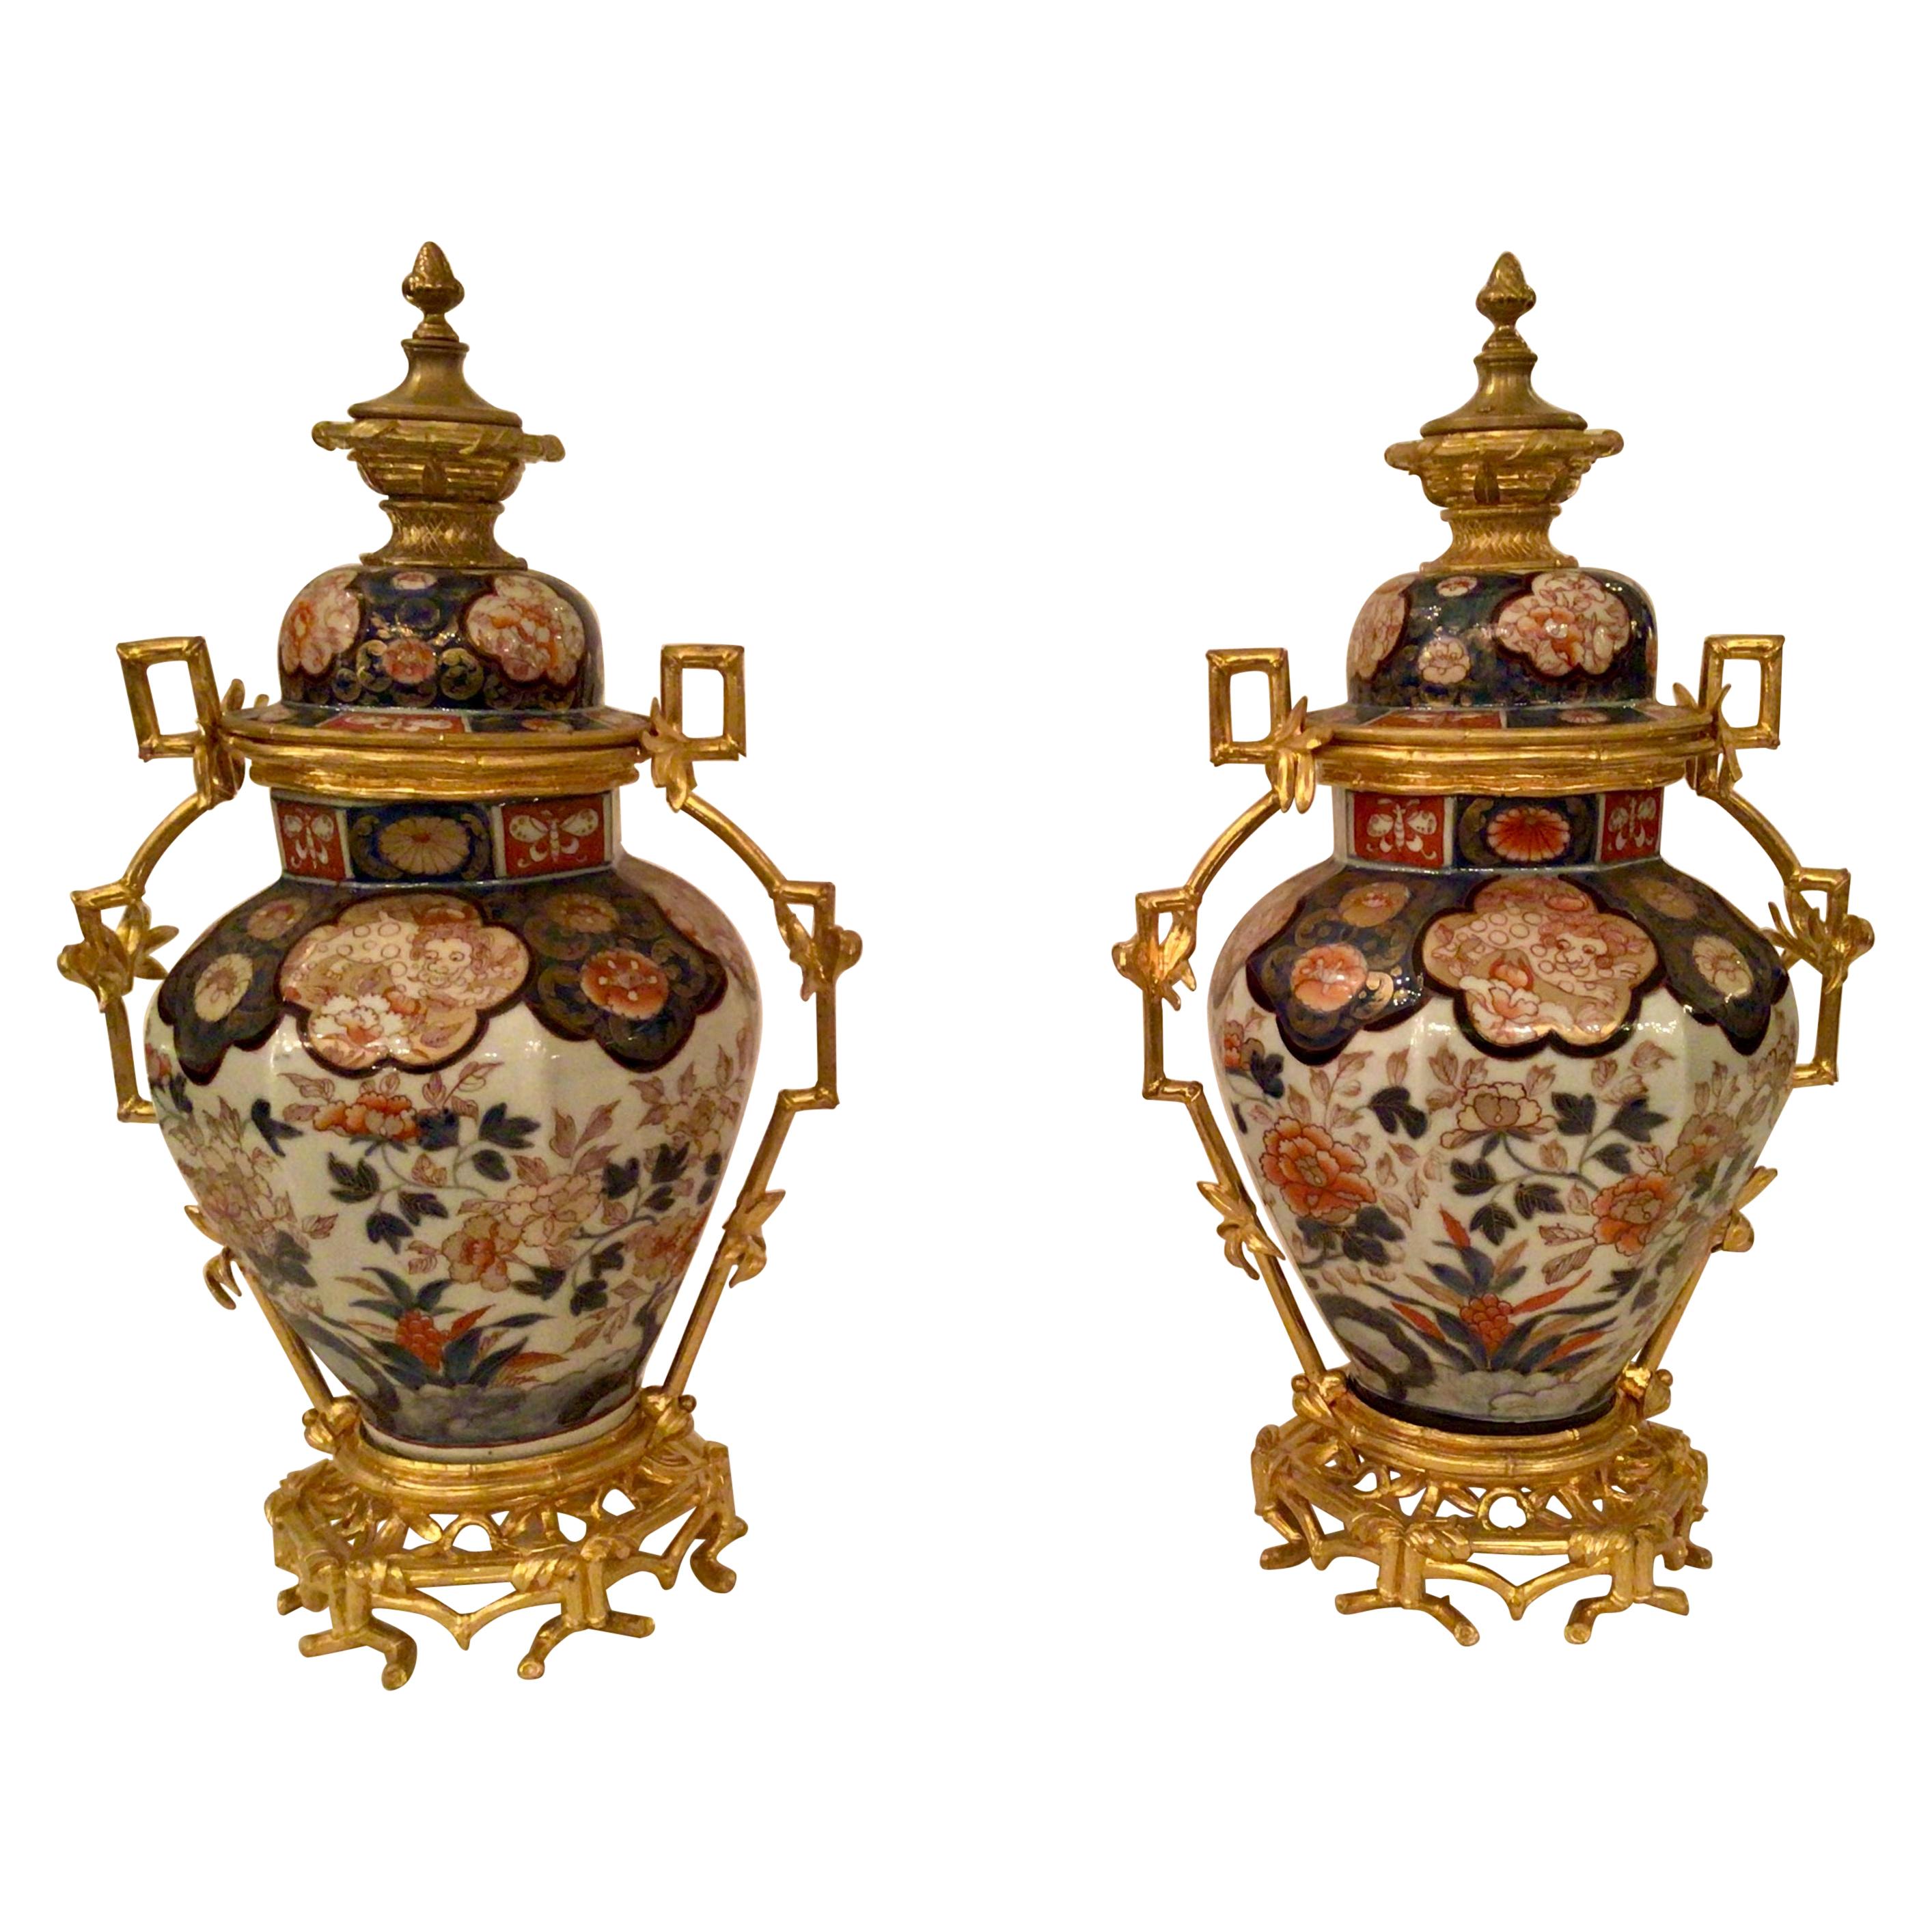 Pair of 19th Century Imari Porcelain and Ormolu Mounted Urns, circa 1840-1860